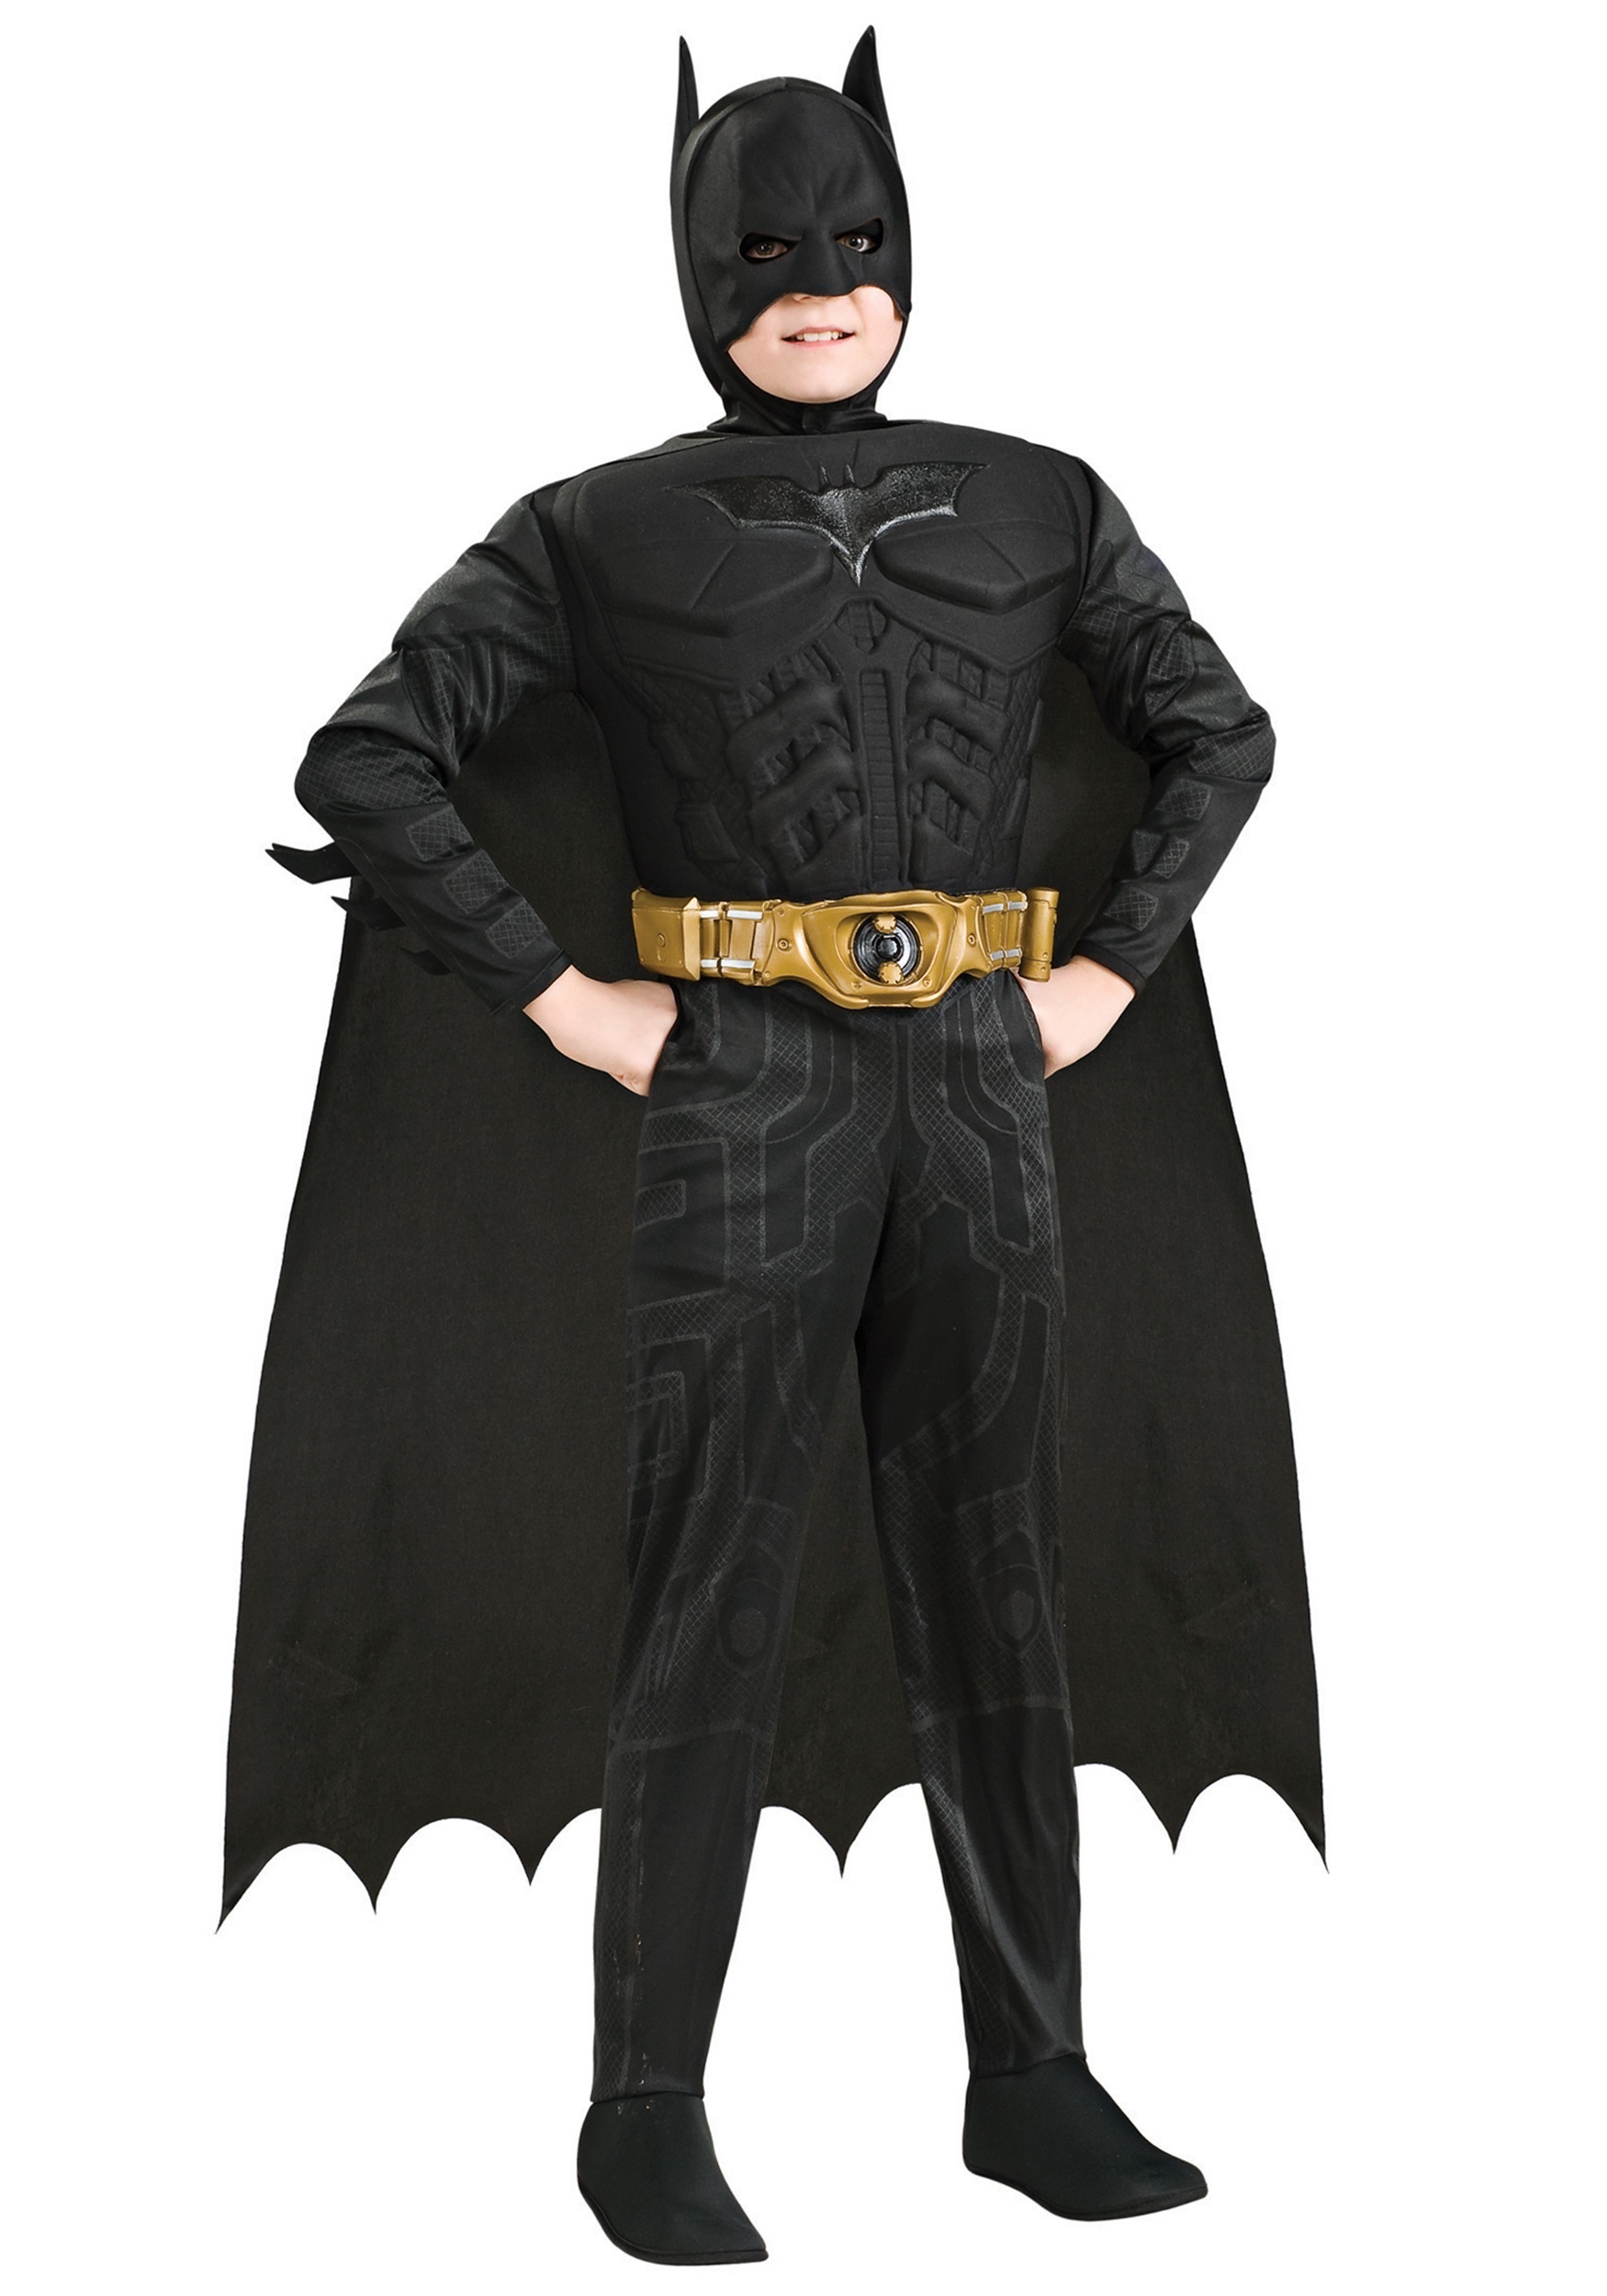 Photos - Fancy Dress Rubies Costume Co. Inc Kids Deluxe Dark Knight Batman Costume Black RU8812 